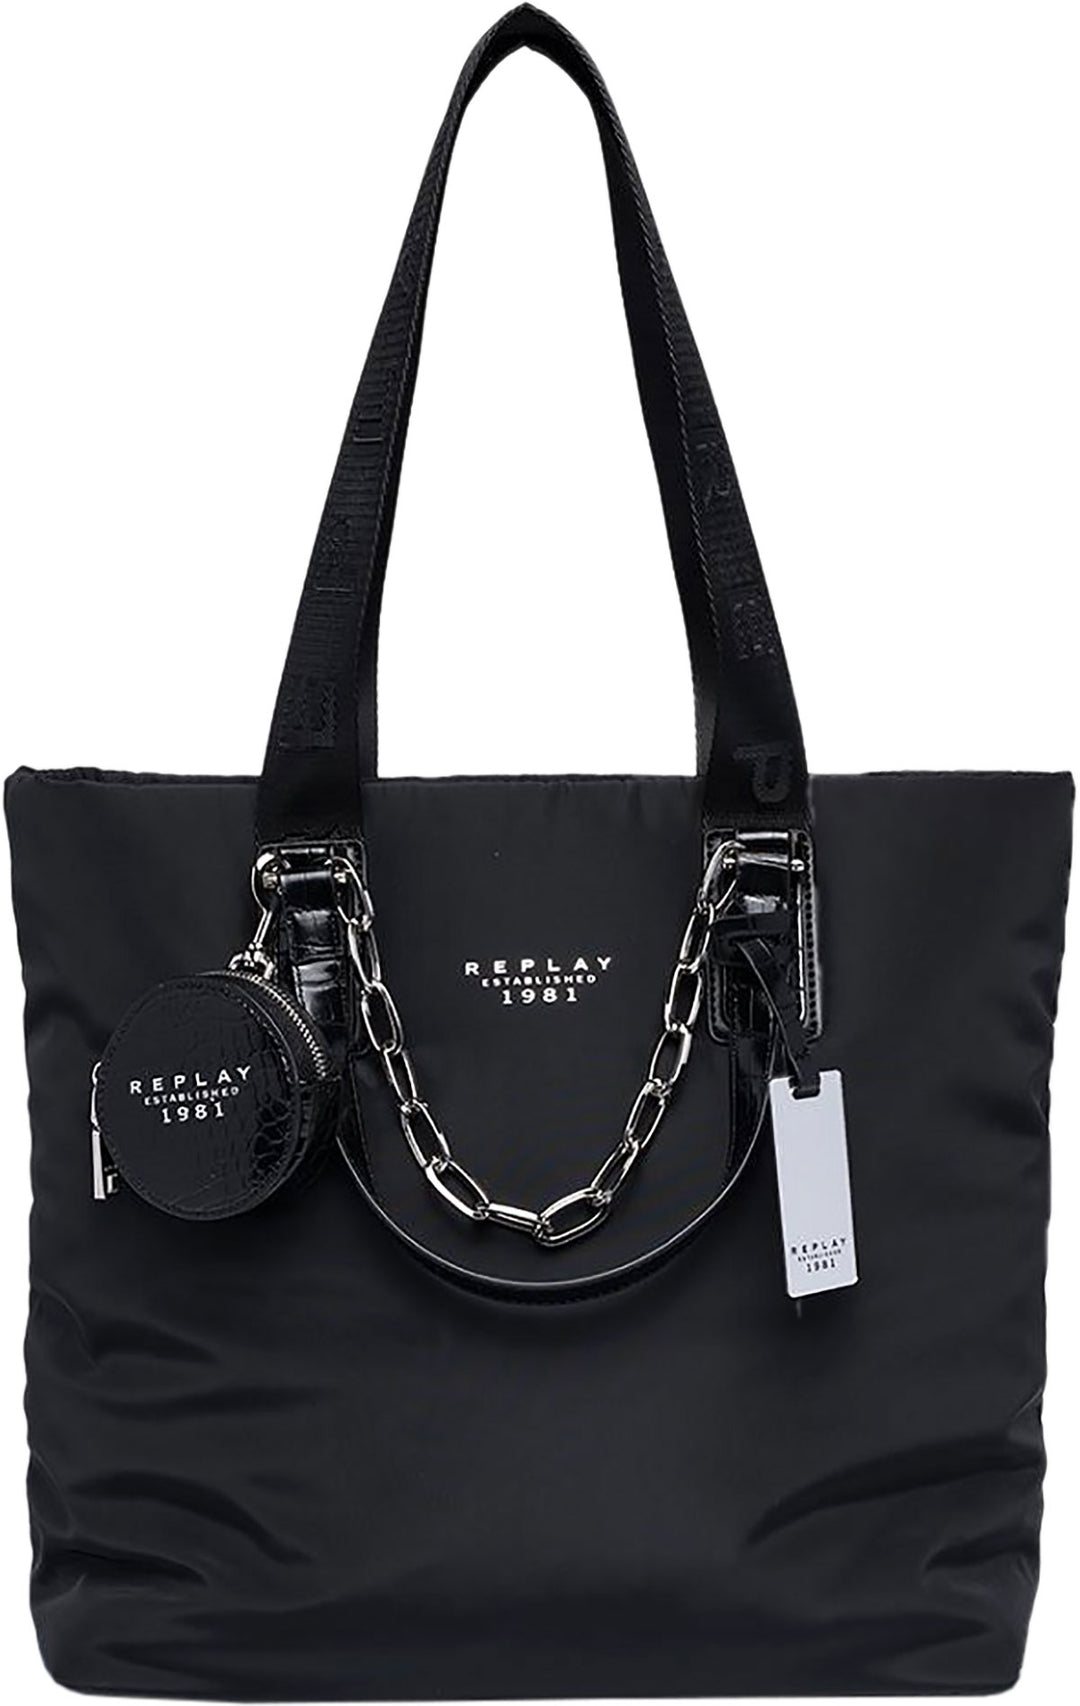 Replay Top Handel Tote Shopping Bag In Black For Women